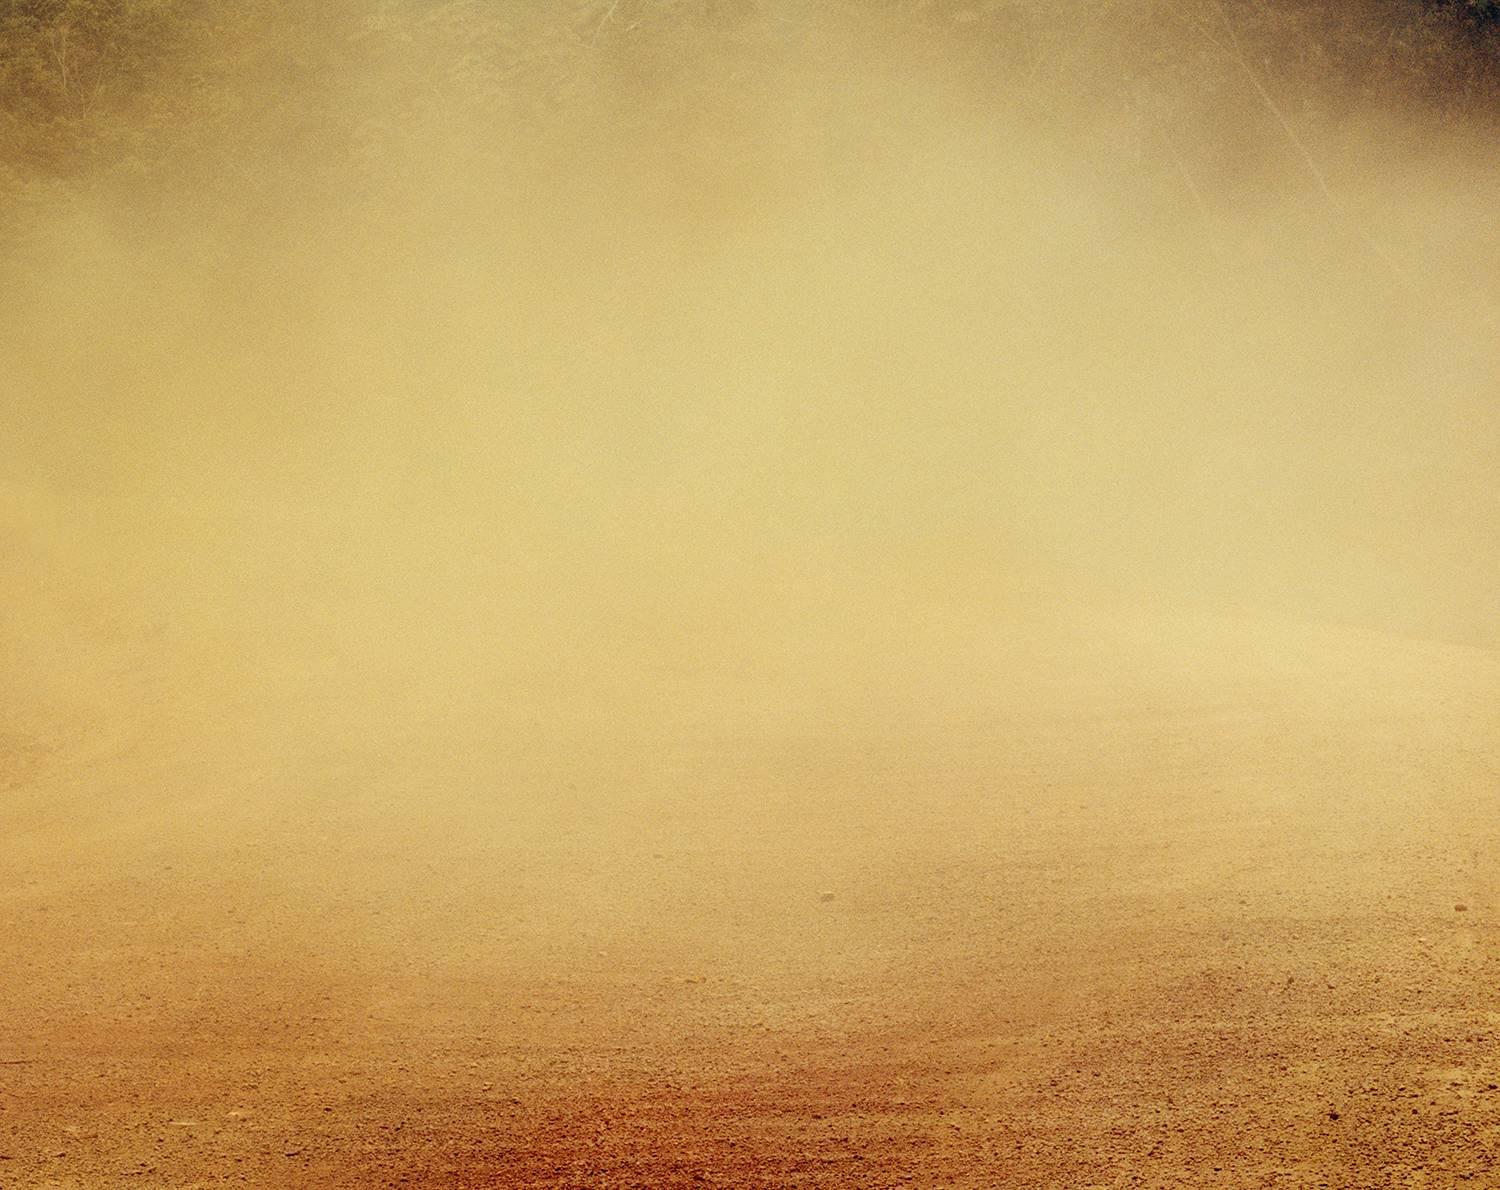 Sasha Bezzubov Landscape Photograph - Dust #4545, 40"x50" limited edition photograph